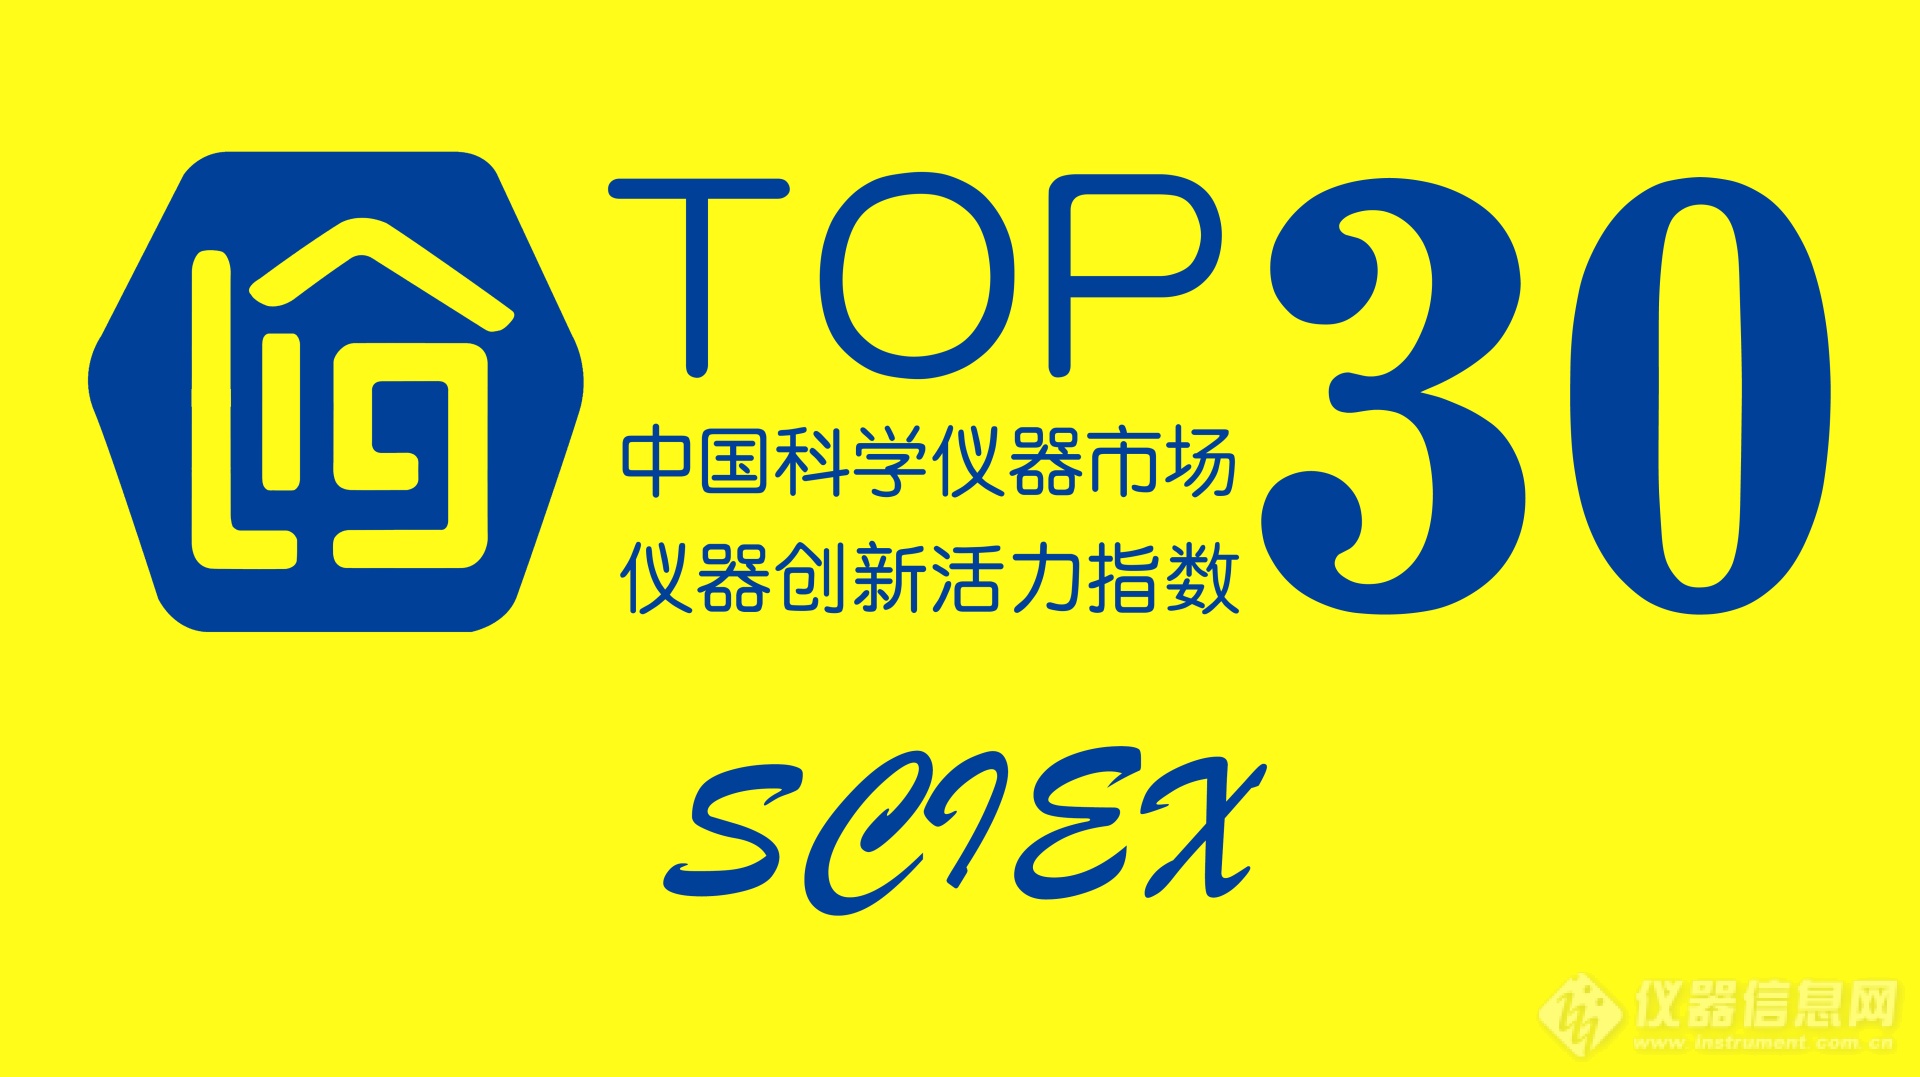 SCIEX入选 “仪器创新活力指数”Top30榜单